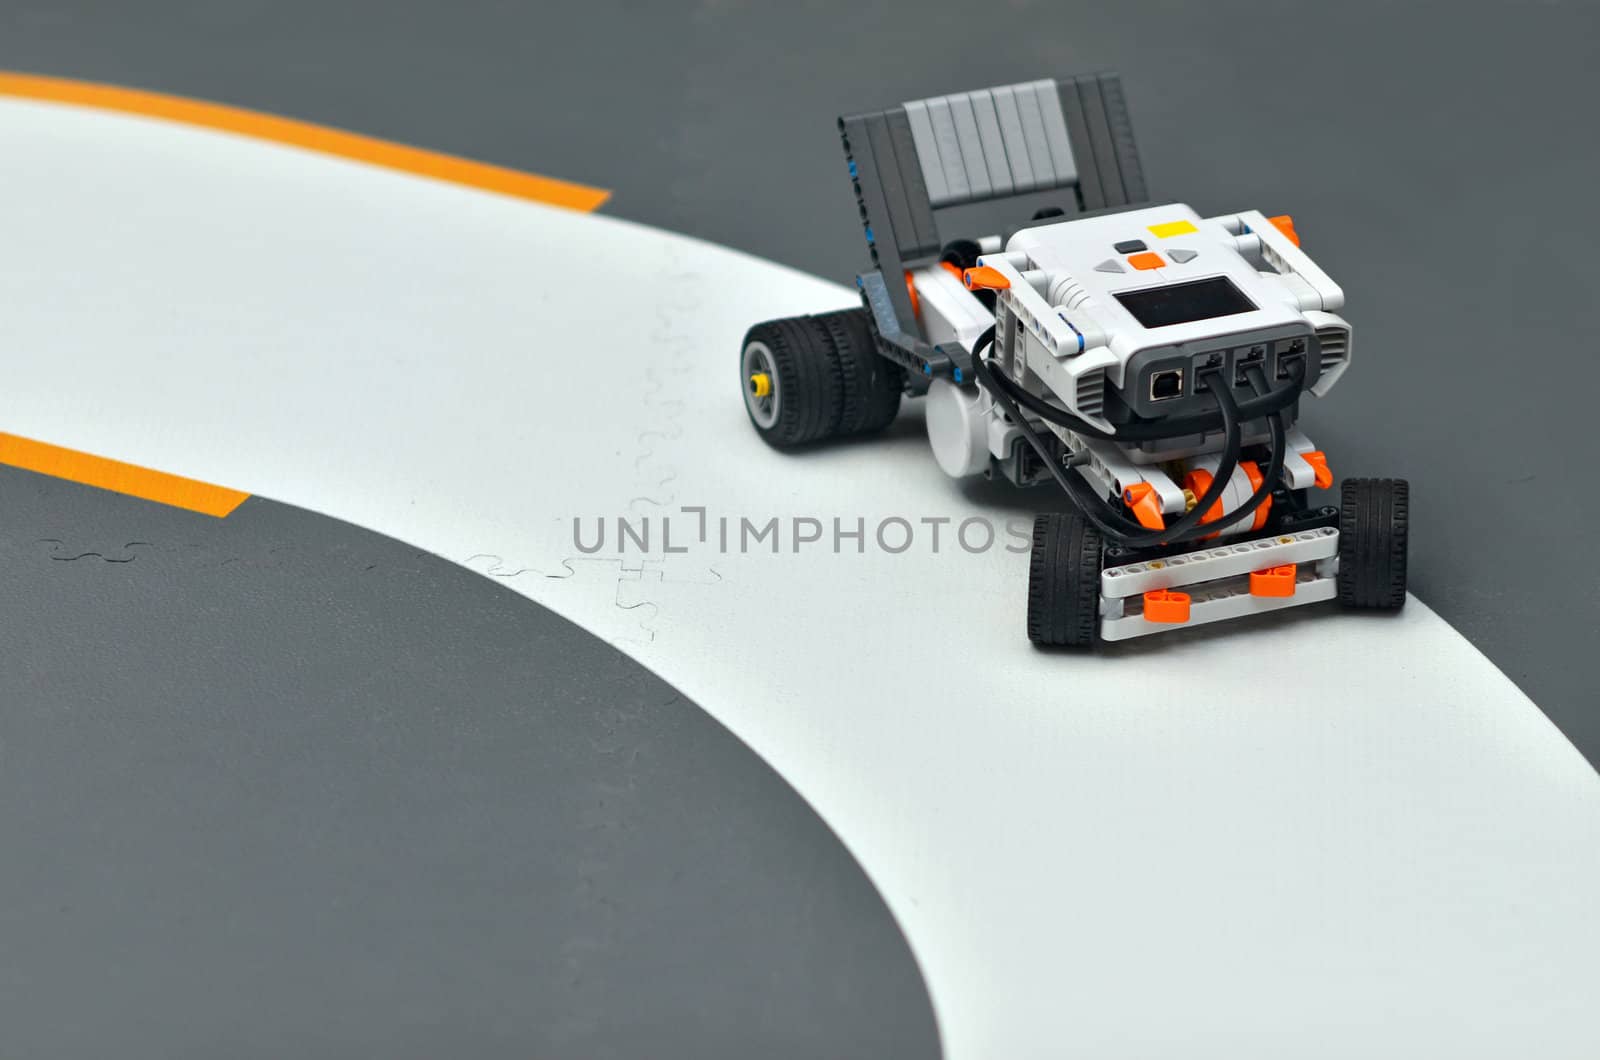 Robot race by Vectorex